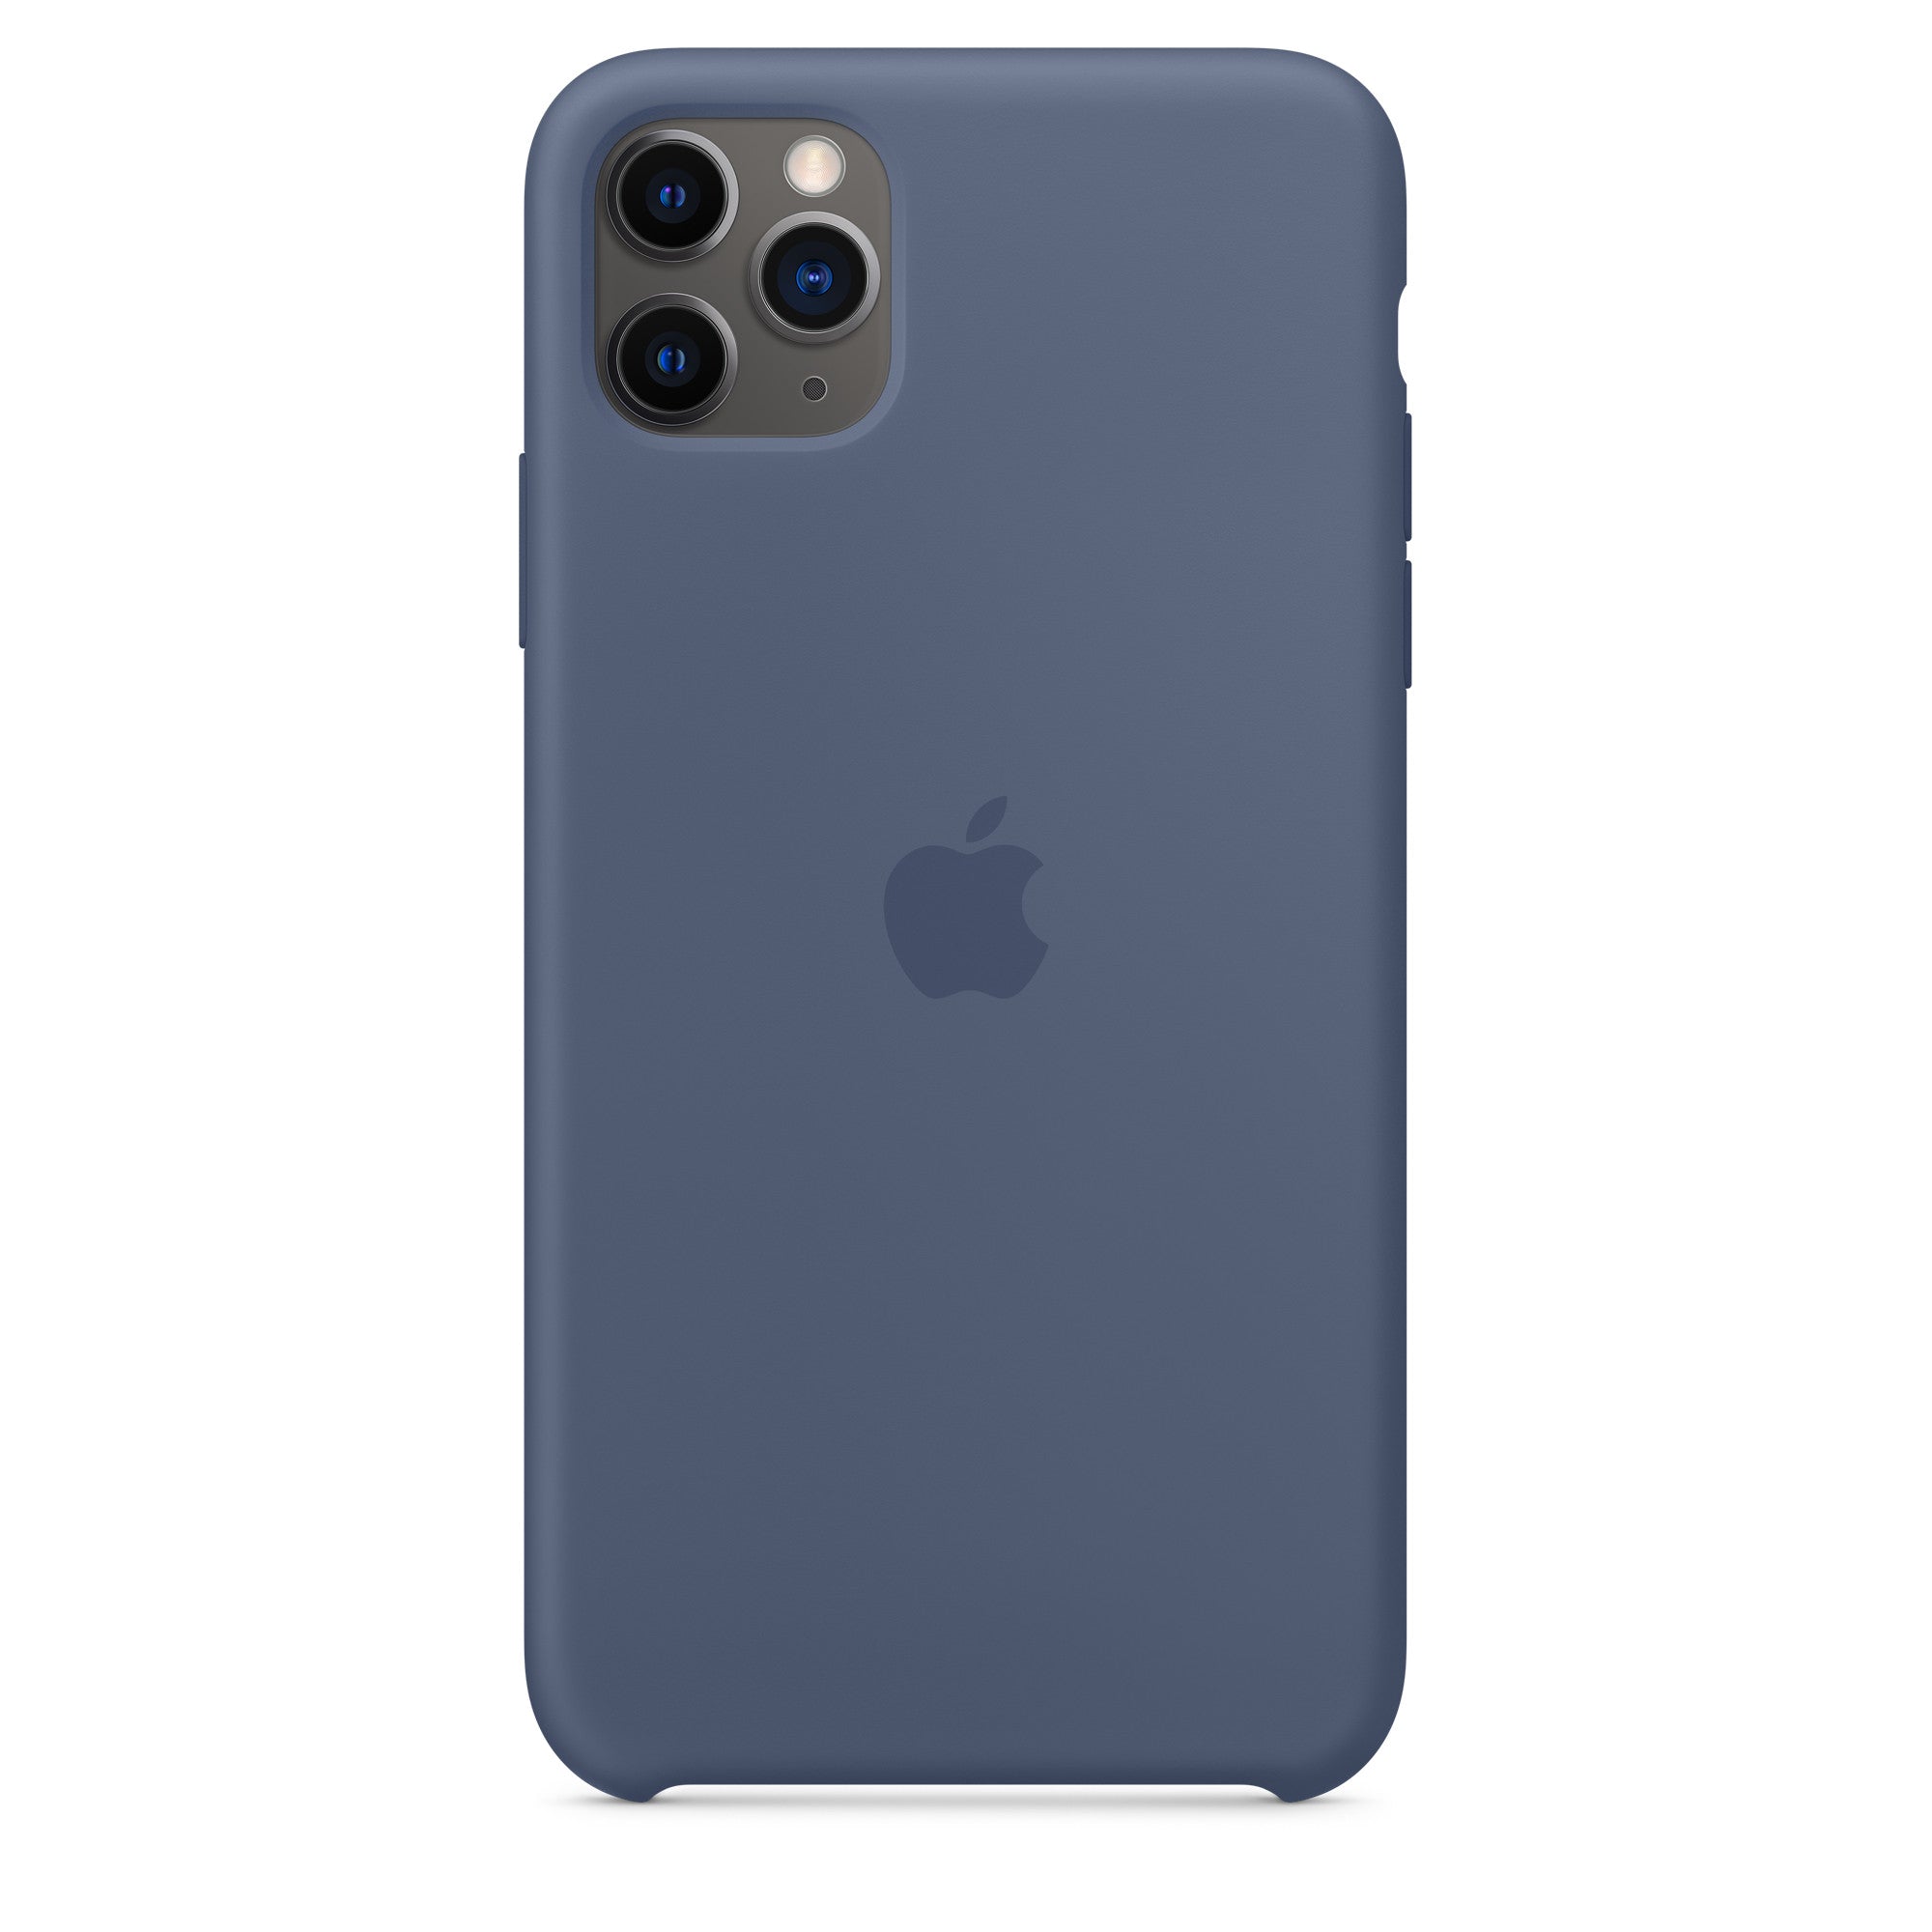 Apple iPhone 11 128GB T-Mobile Smartphone (Purple) - Good